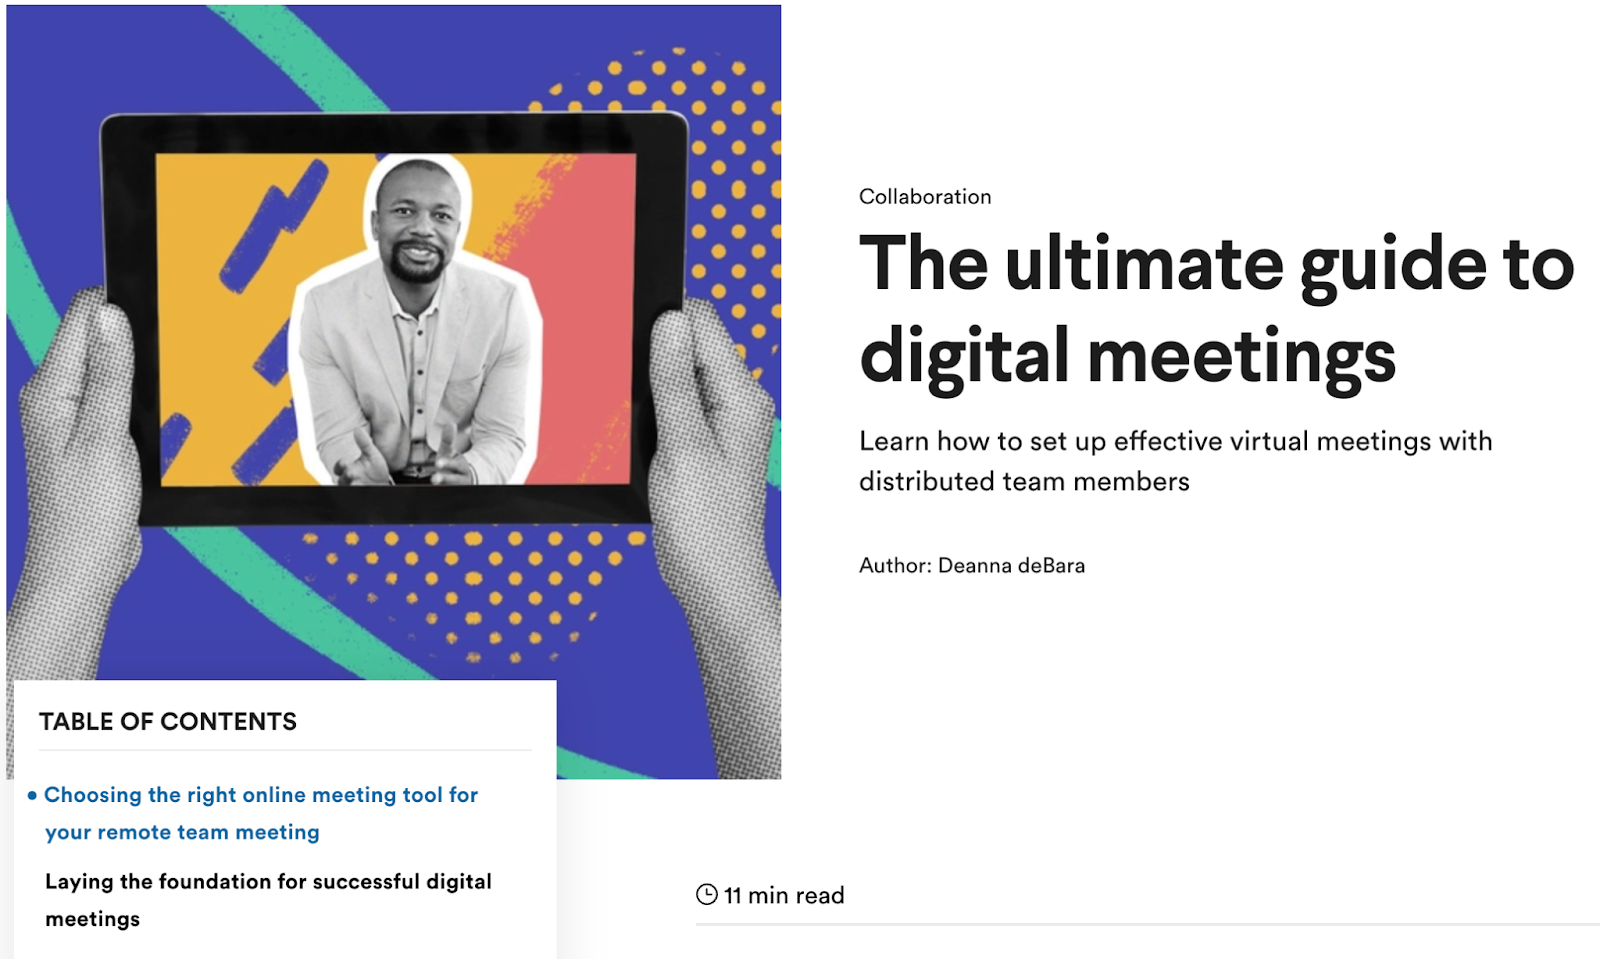 The ultimate guide to digital meetings